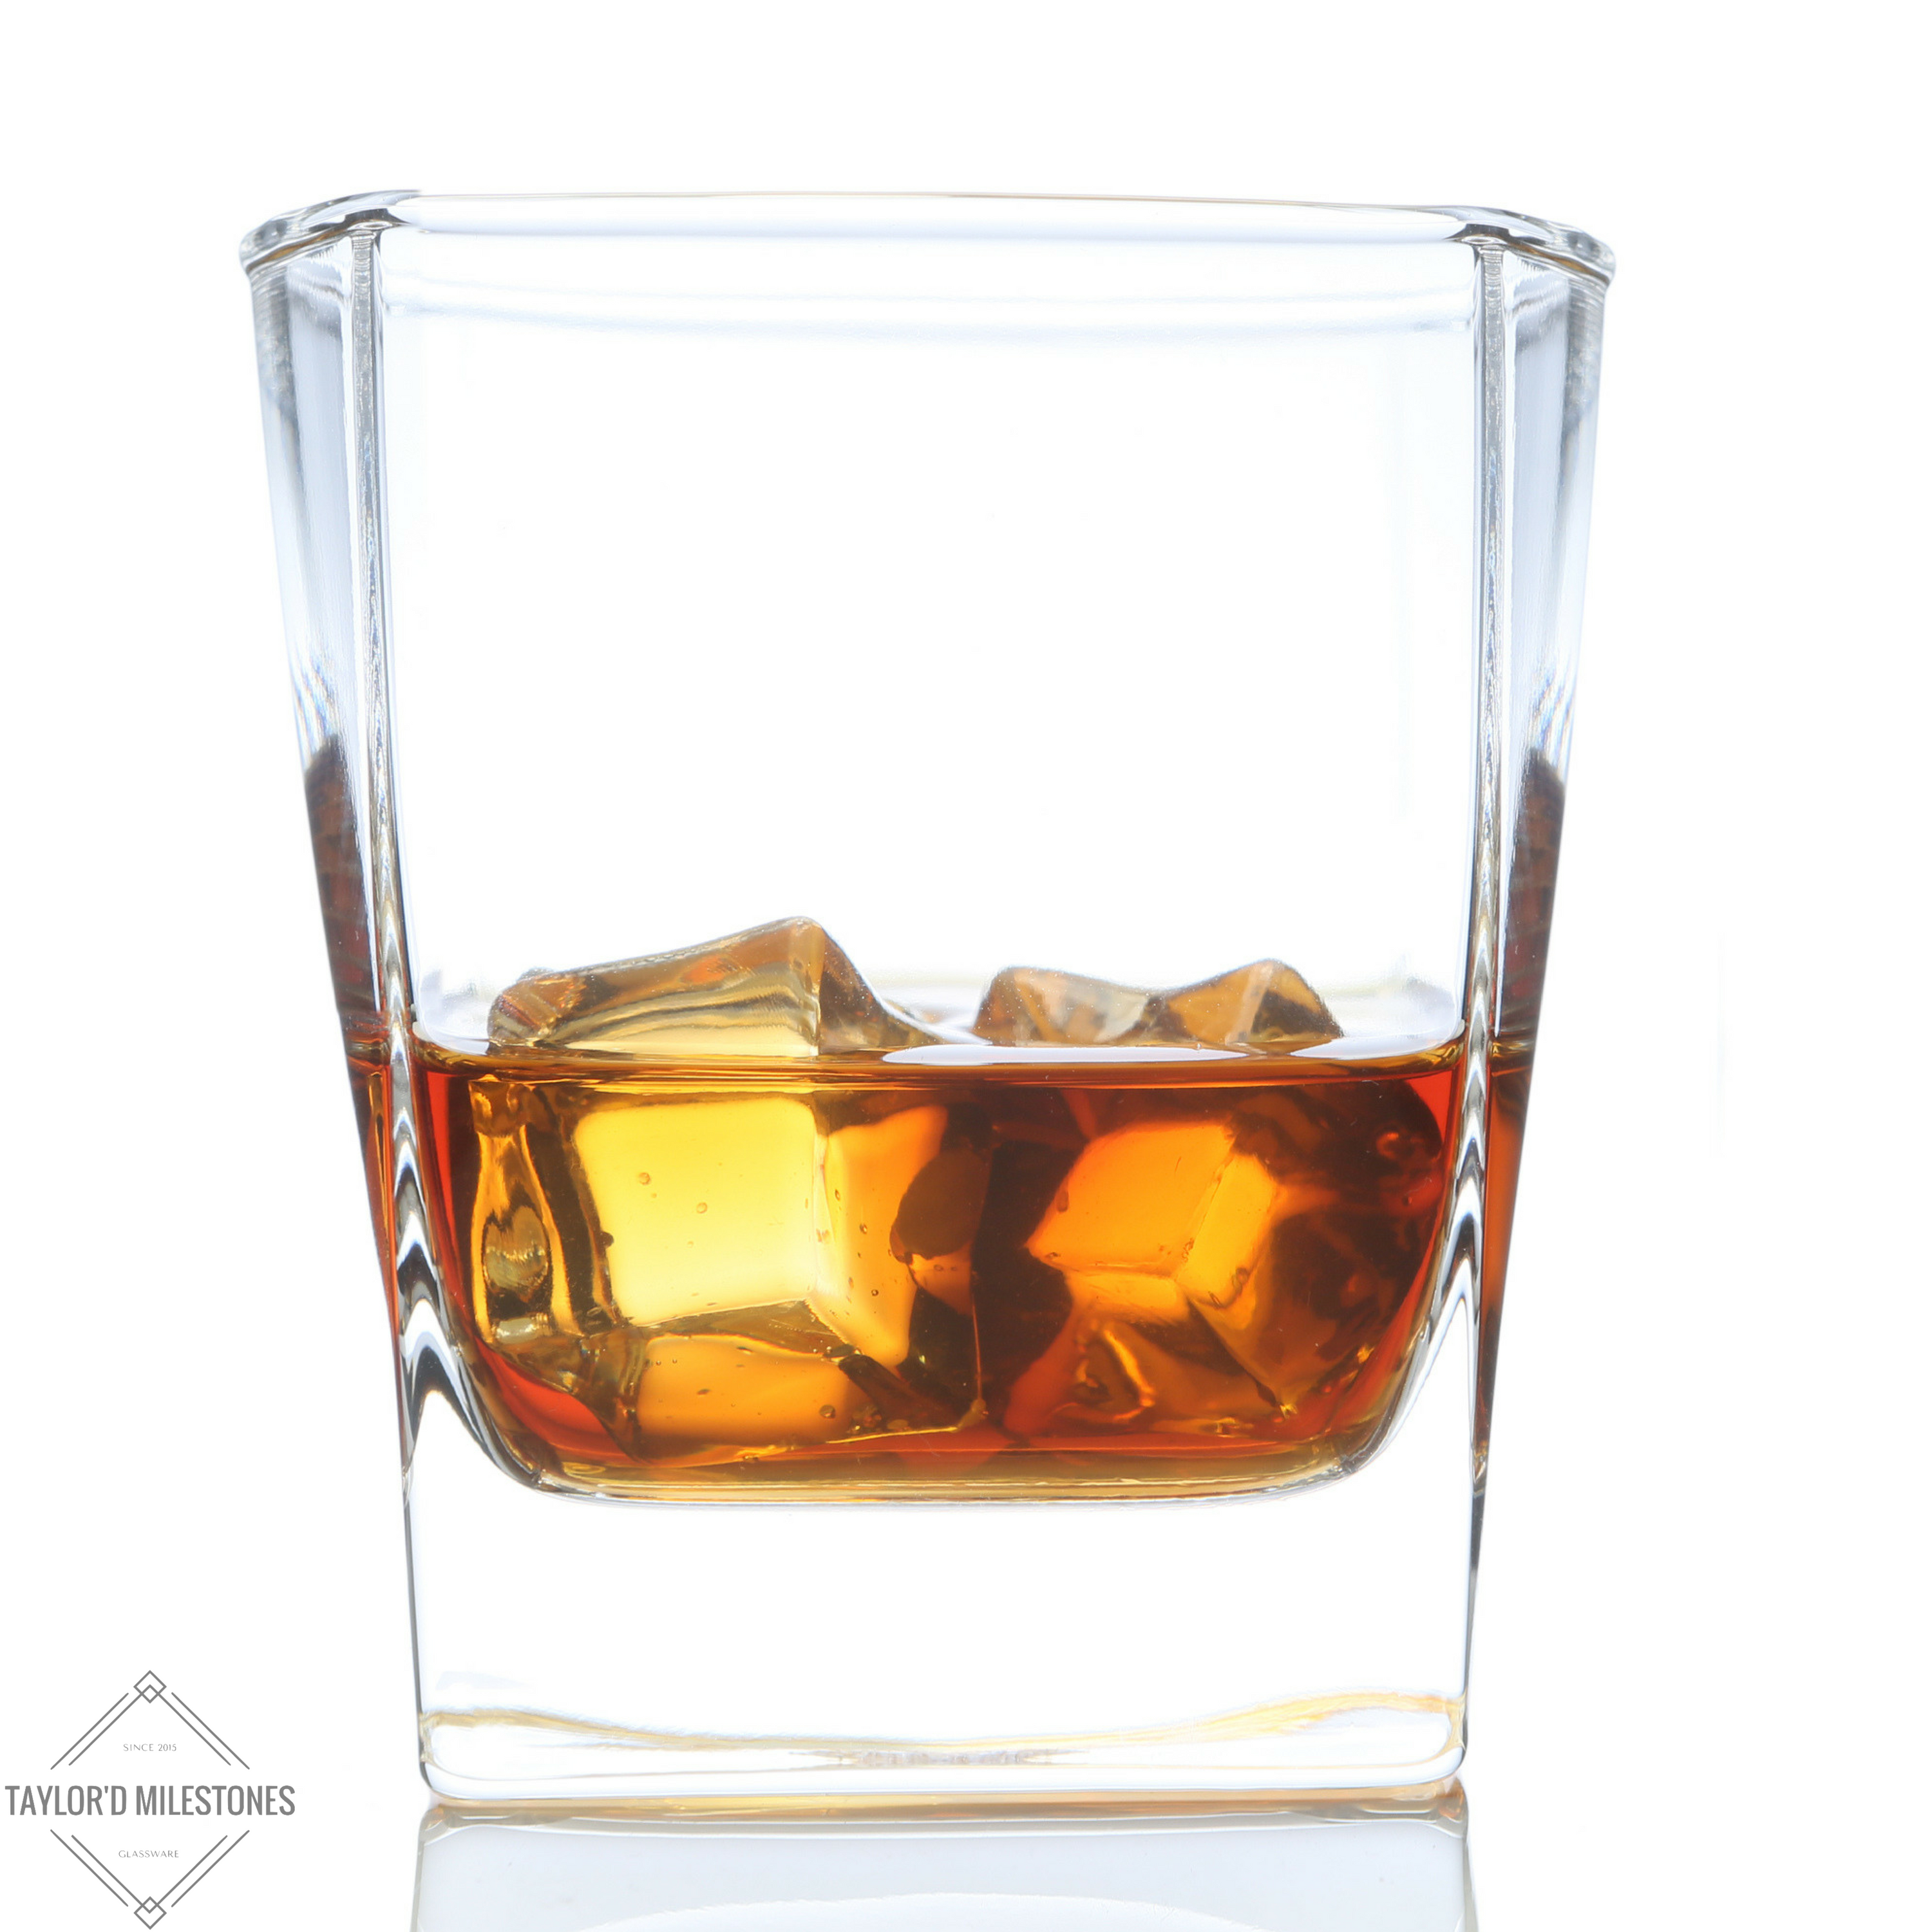 Taylor D Milestones No 3 Select 10 5 Oz Whiskey Scotch Gl